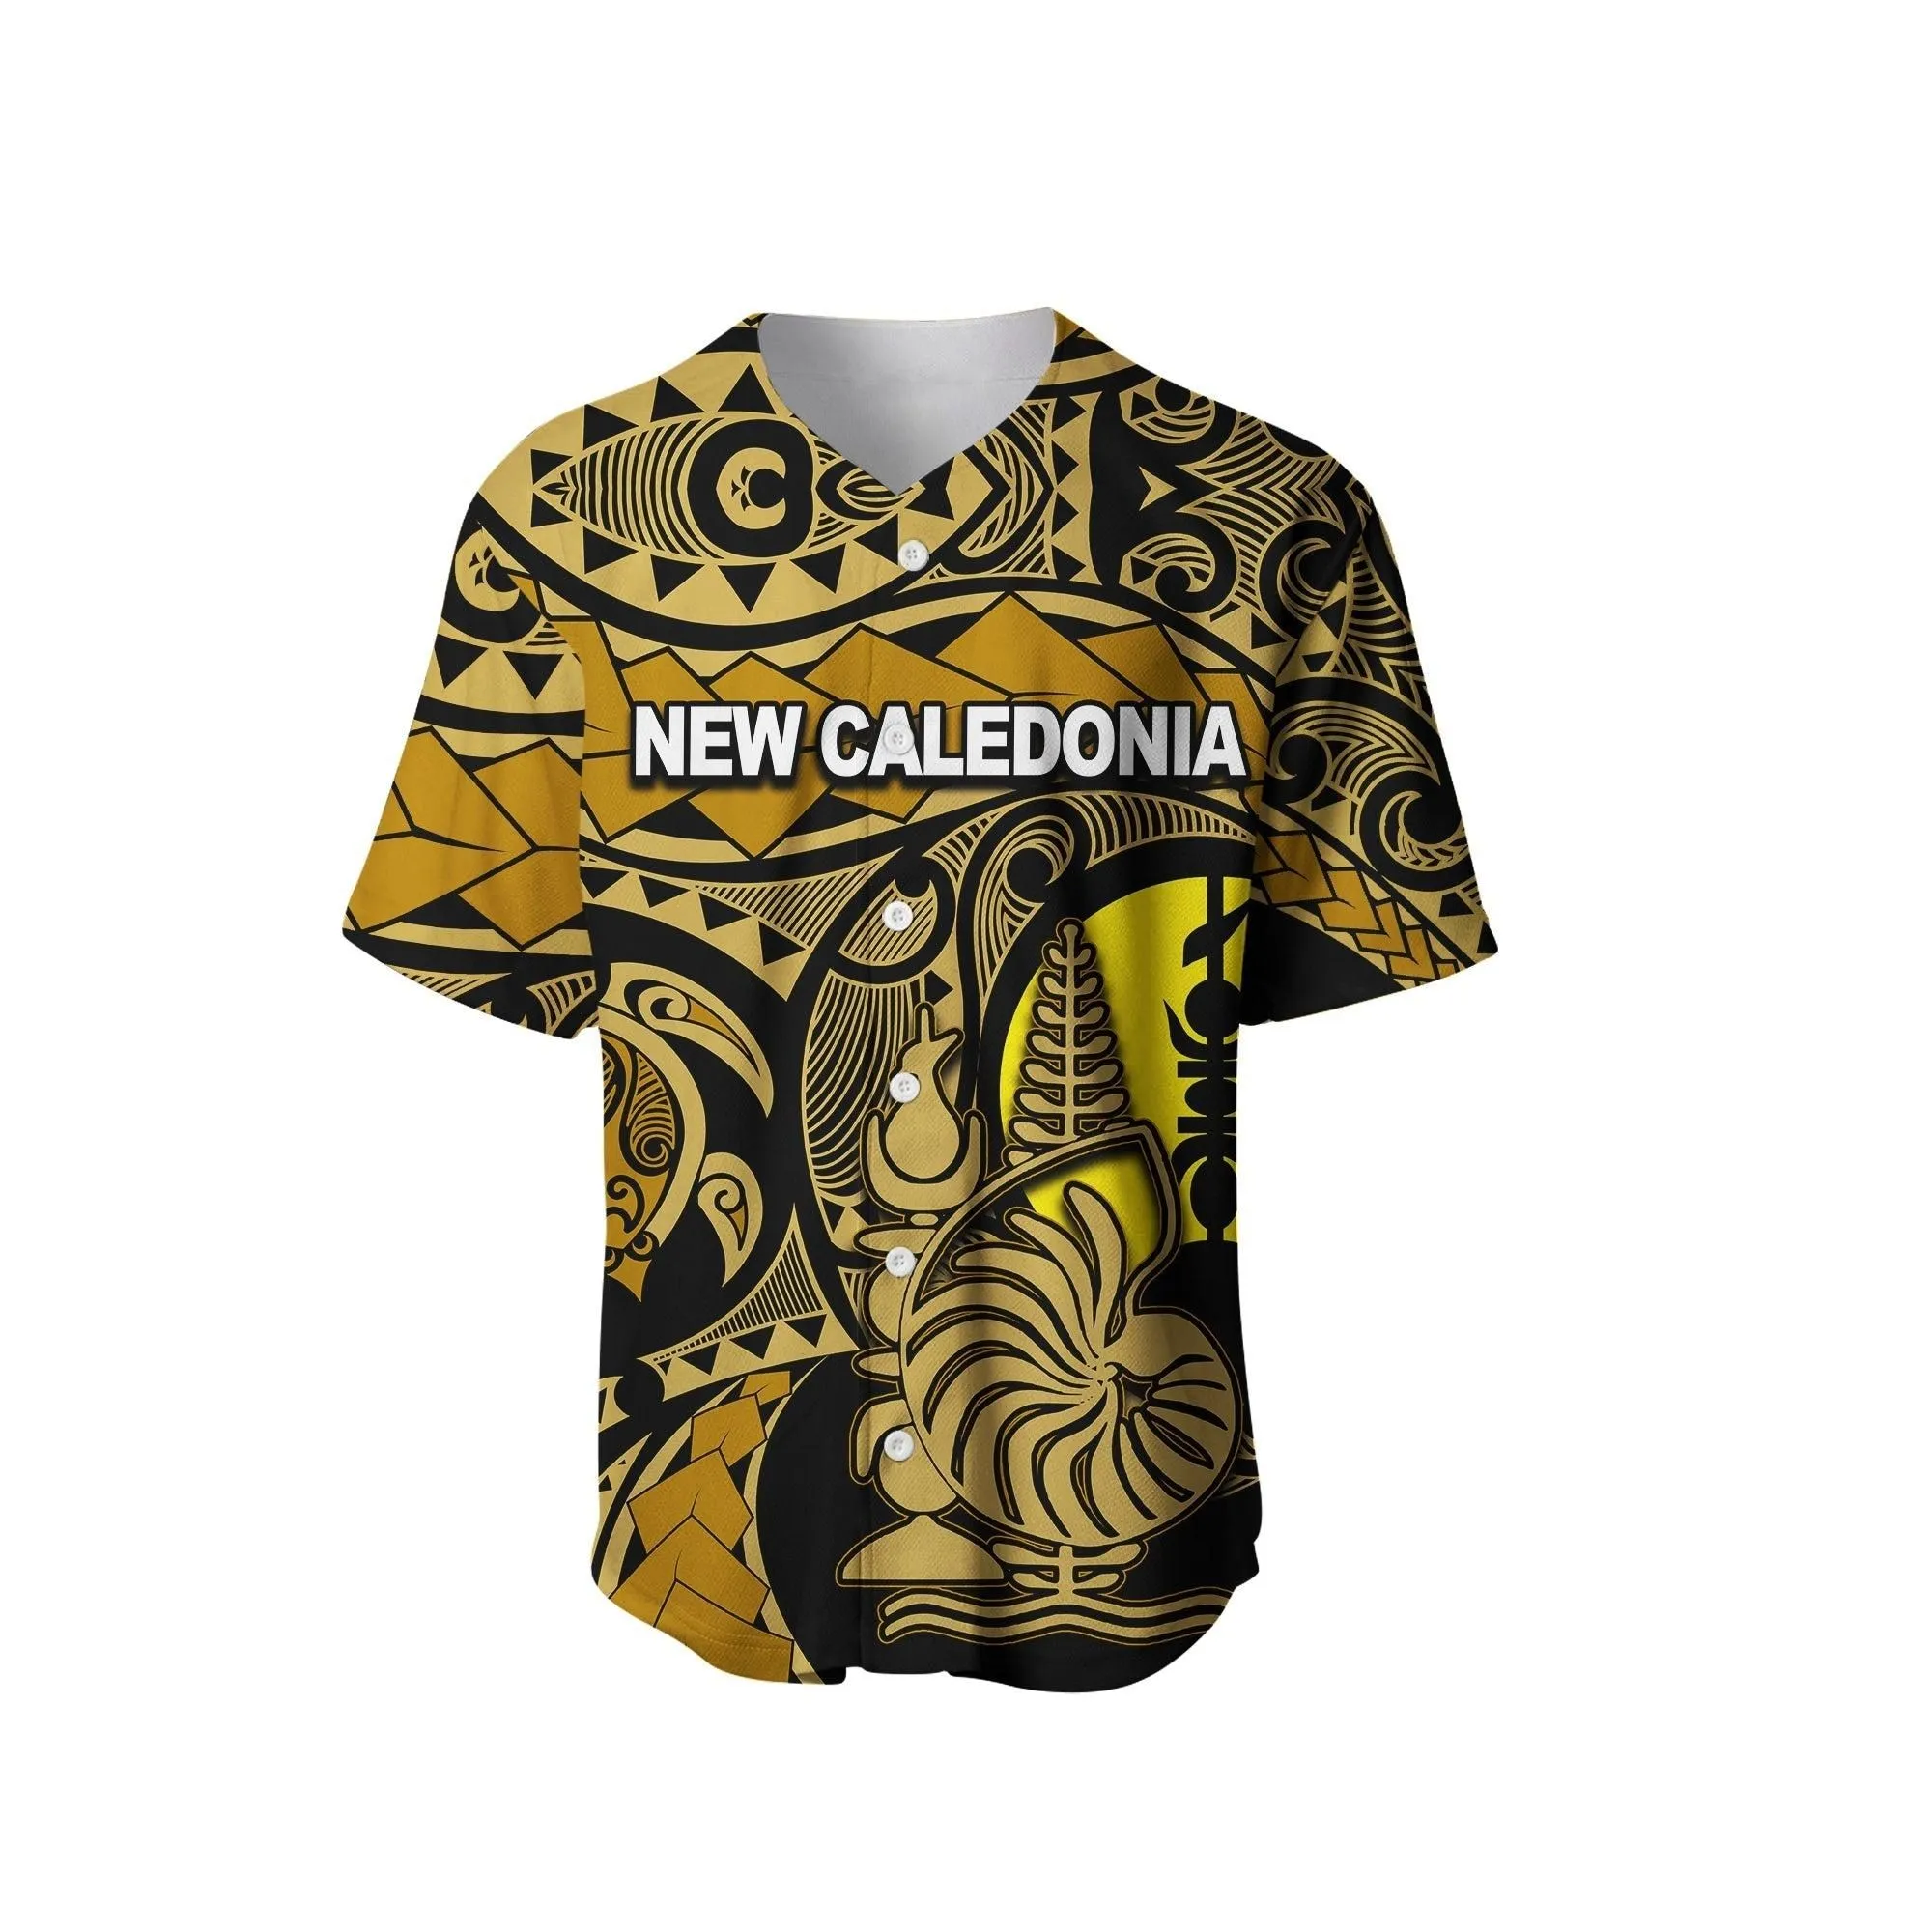 (Custom Personalised) New Caledonia Baseball Shirt Gold Color Lt6_0